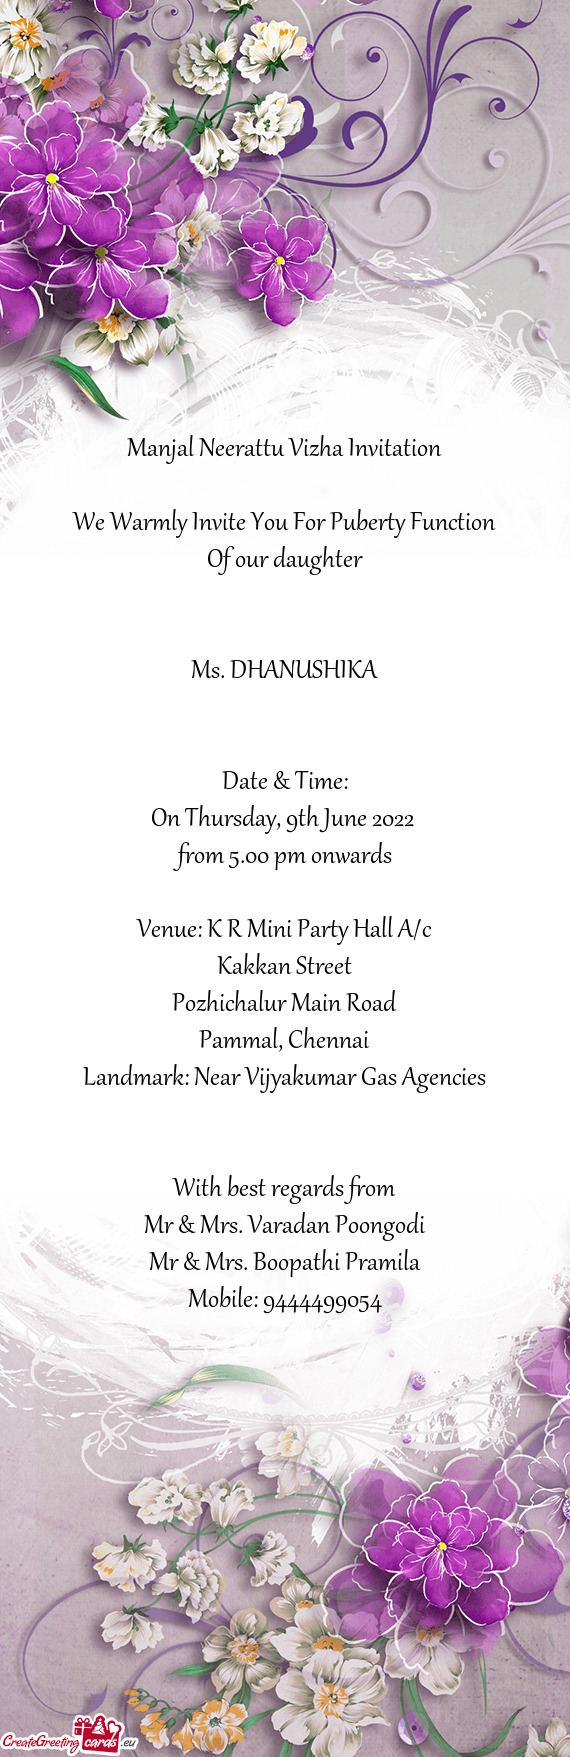 Landmark: Near Vijyakumar Gas Agencies